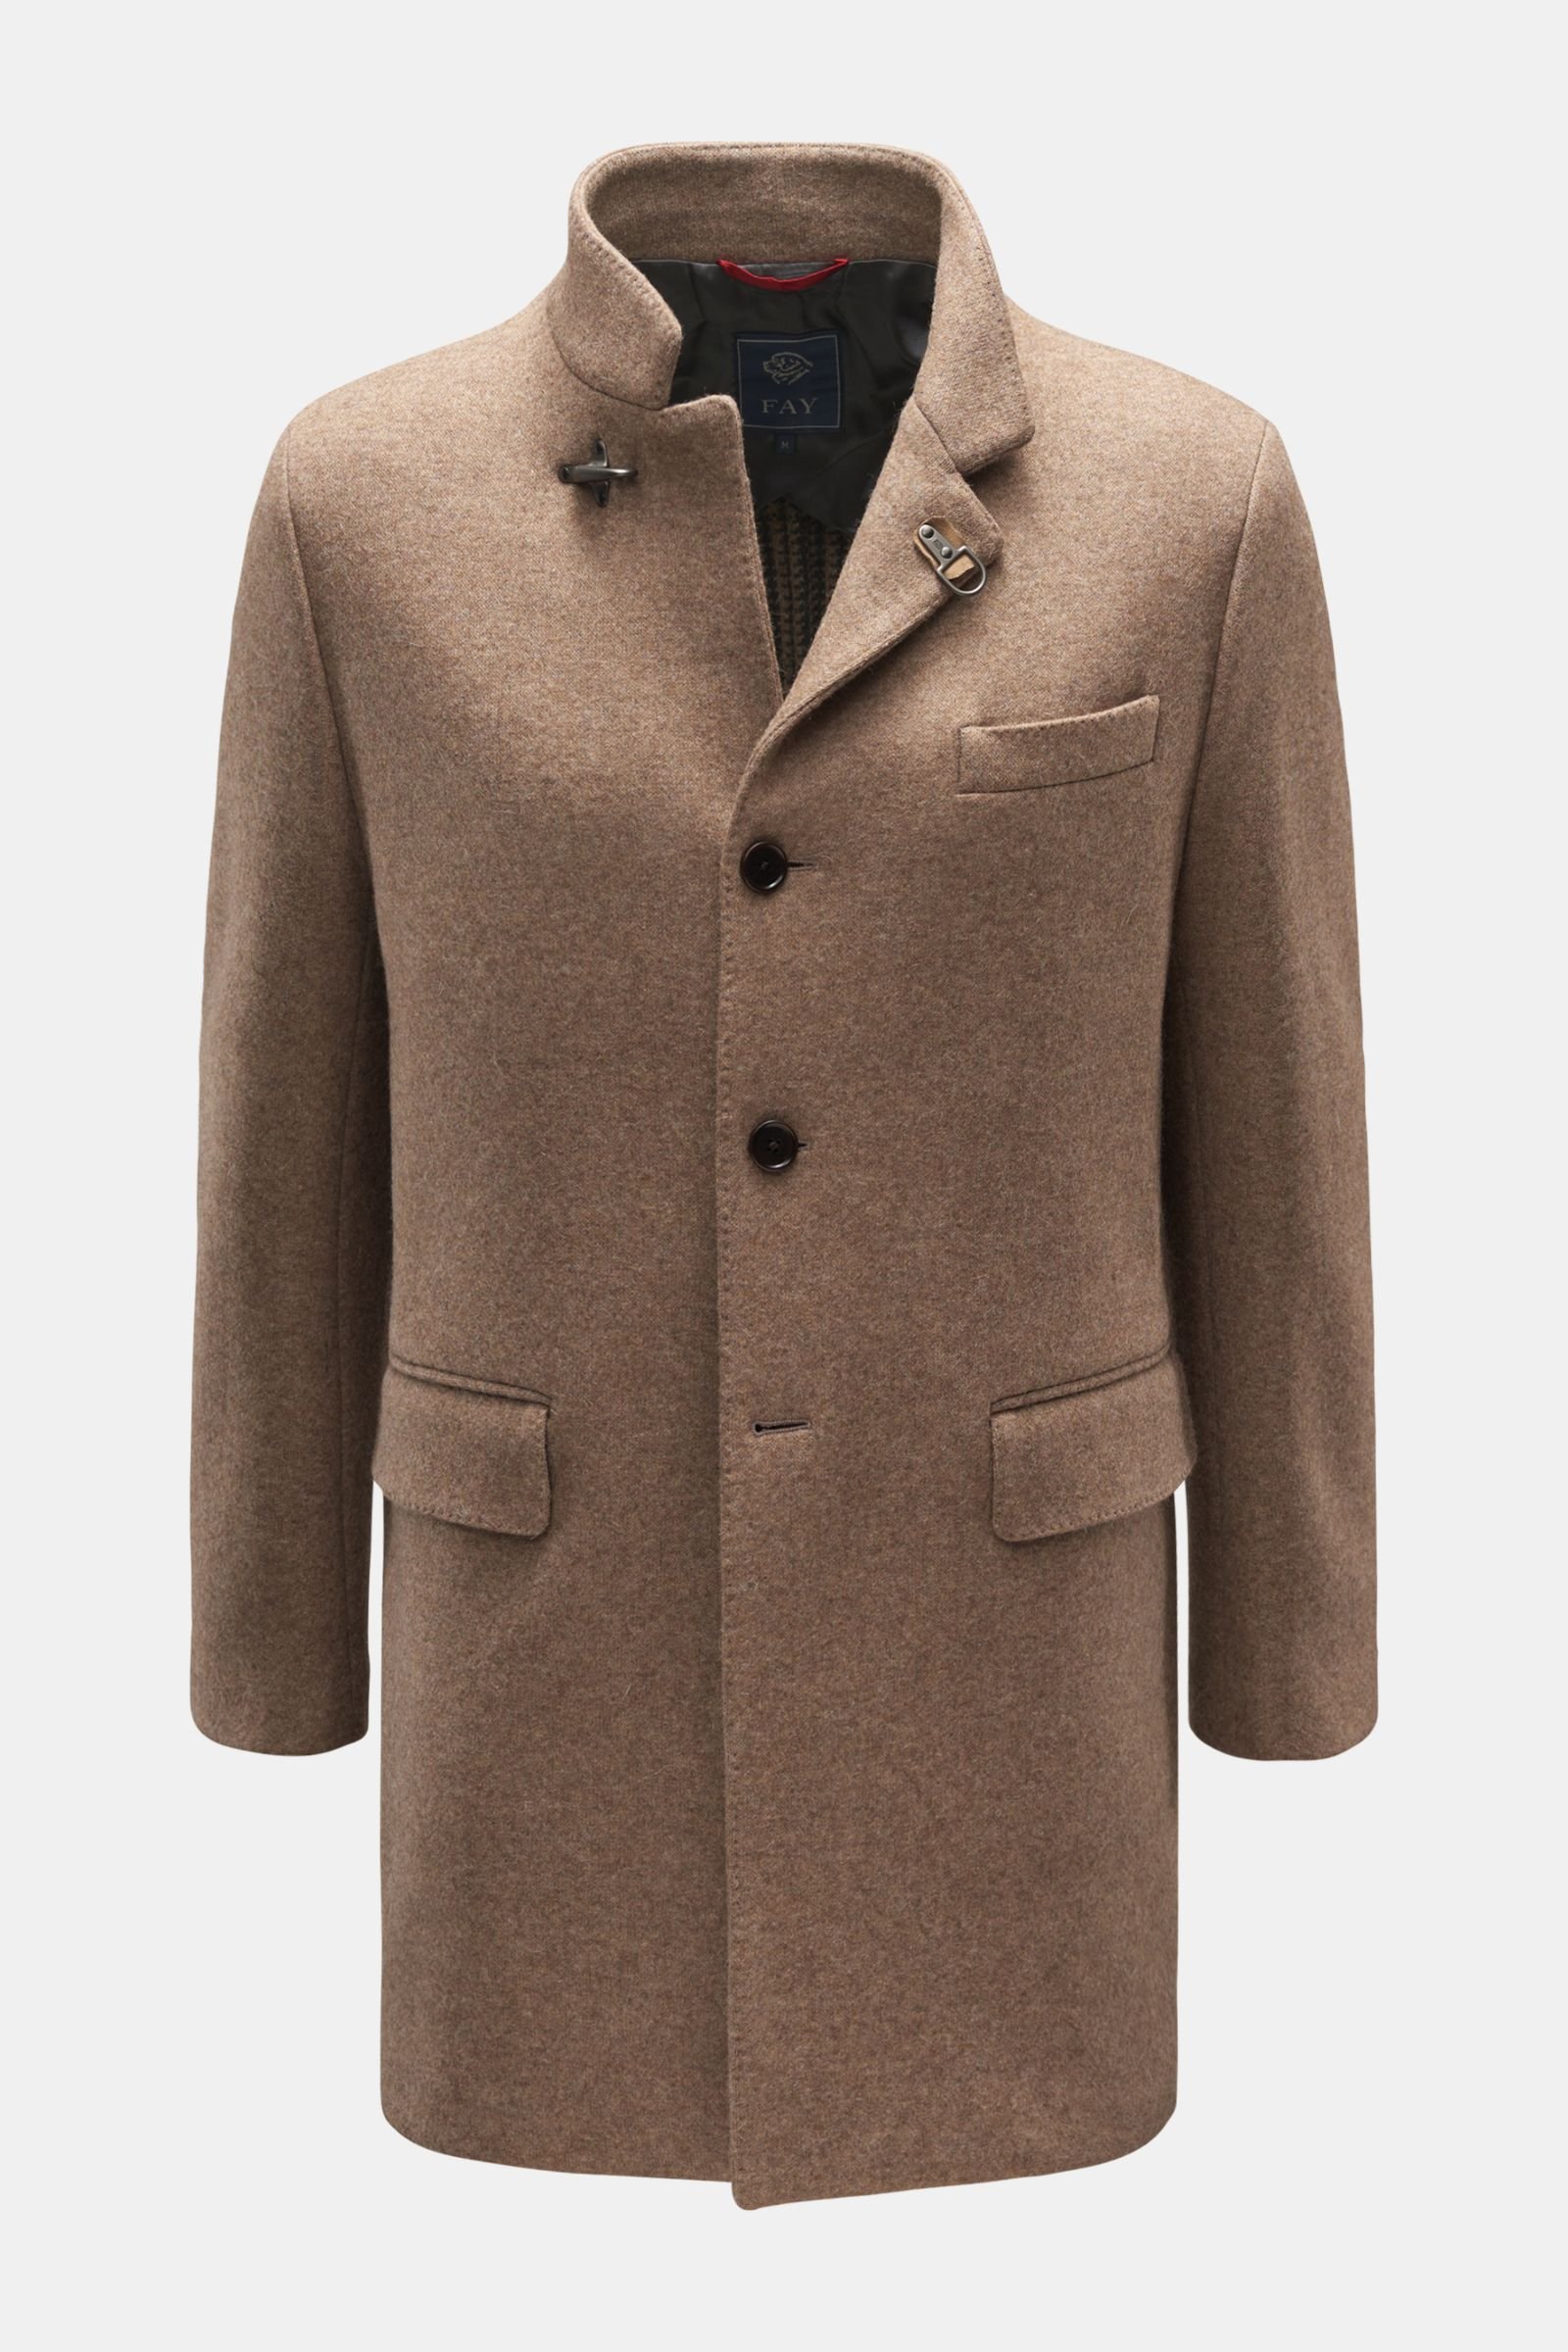 Jersey coat grey-brown